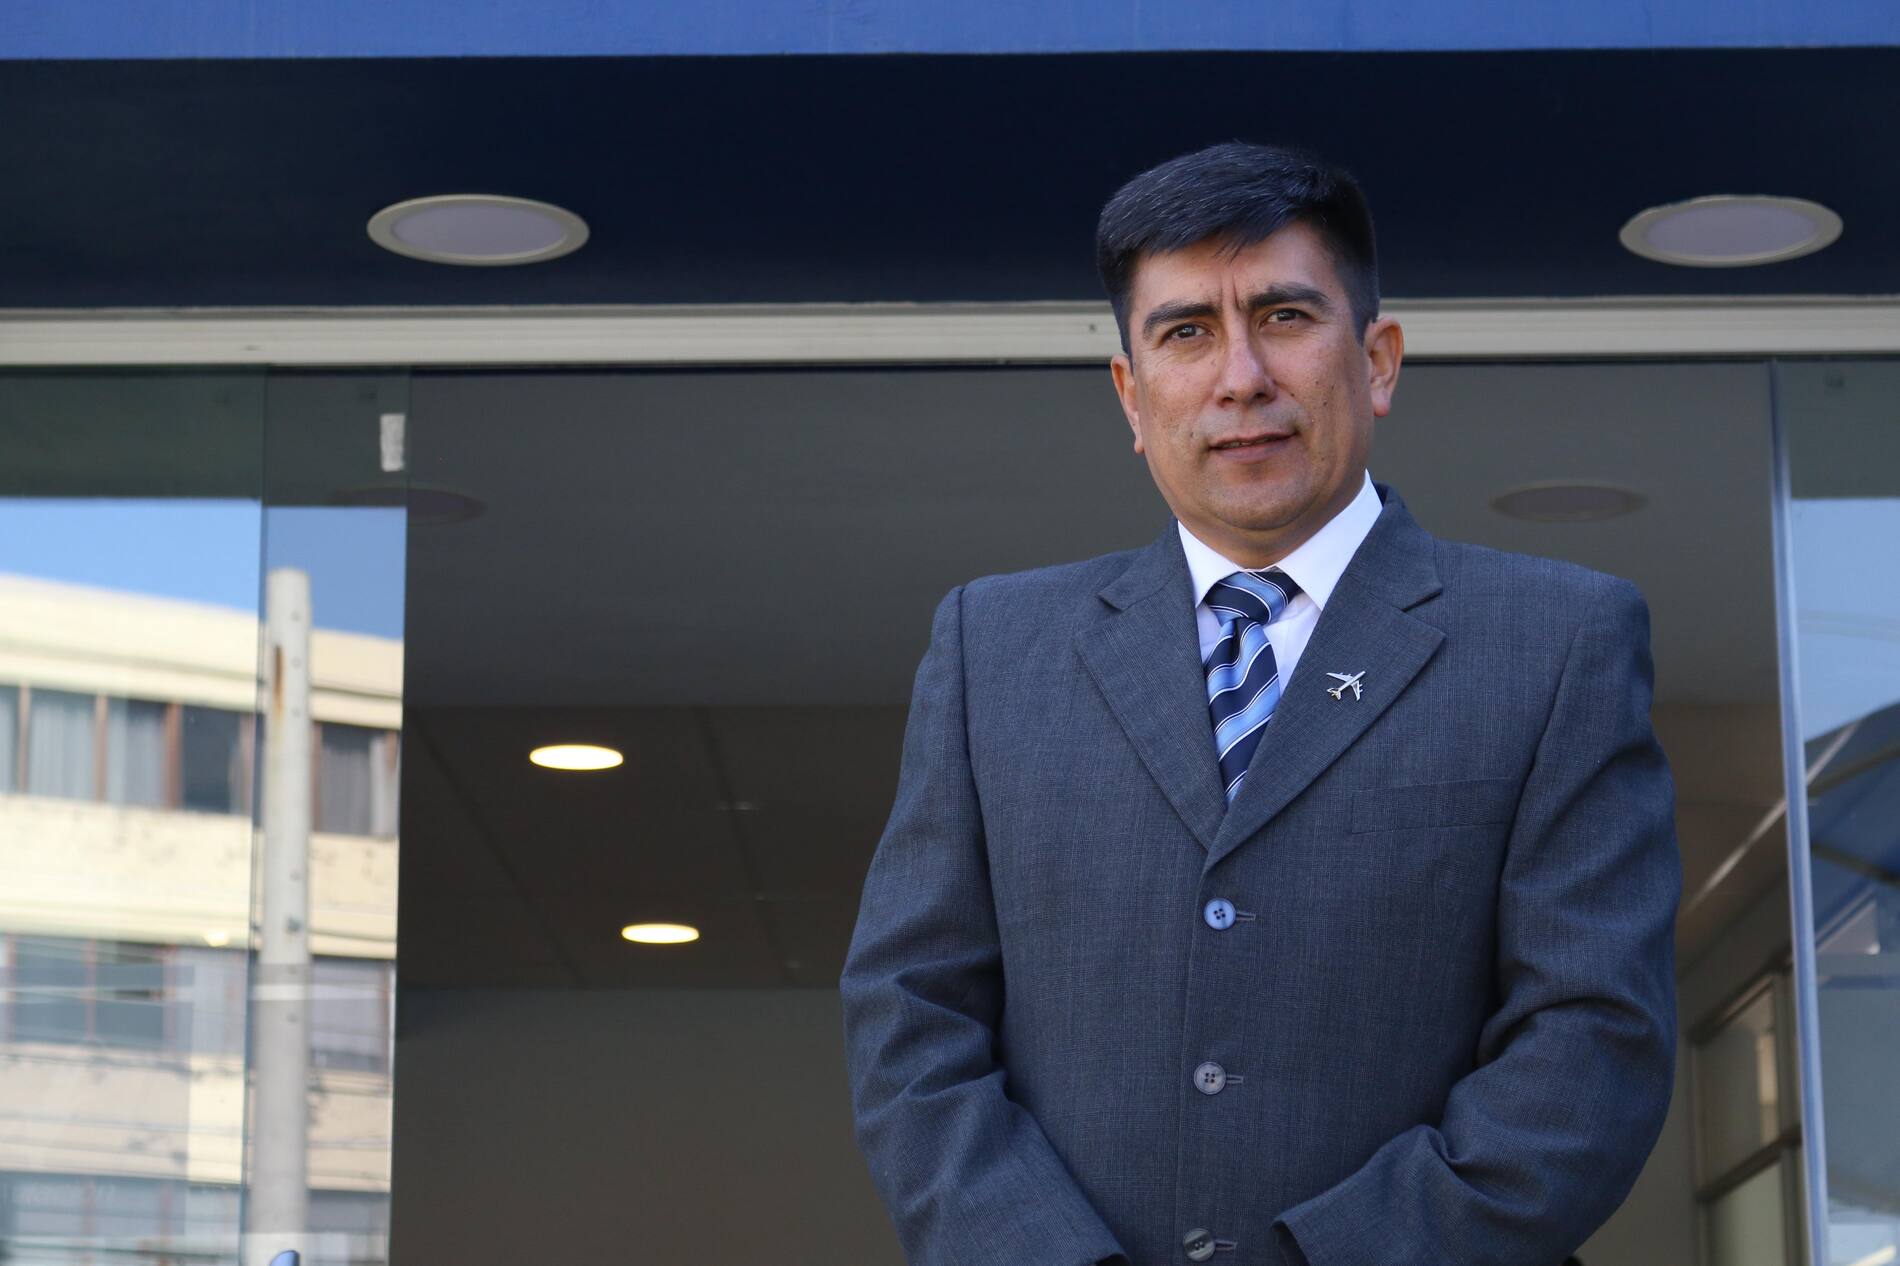 Three questions to Ronald Casso, CEO Boliviana de Aviación